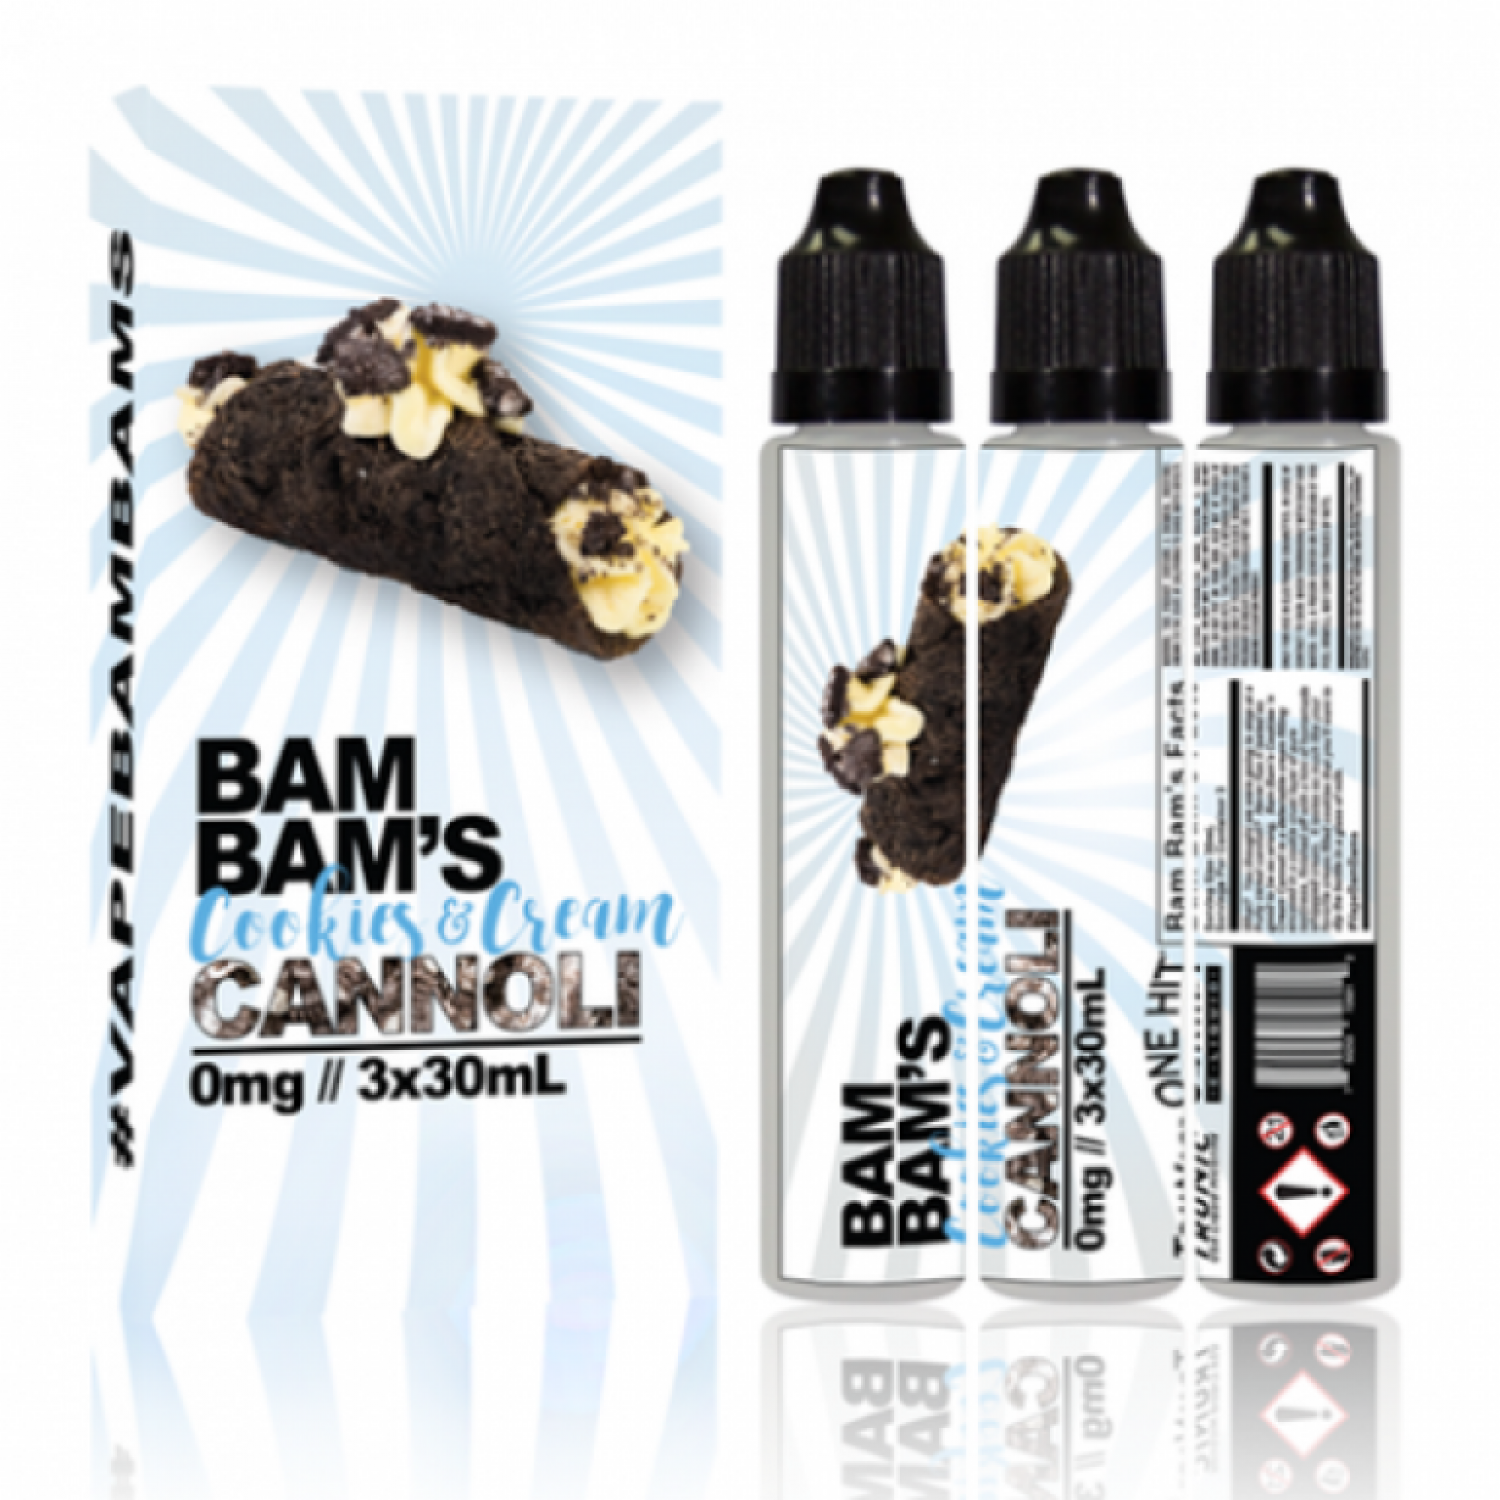 Bam Bams - Cookies & Cream Cannoli Premium Likit